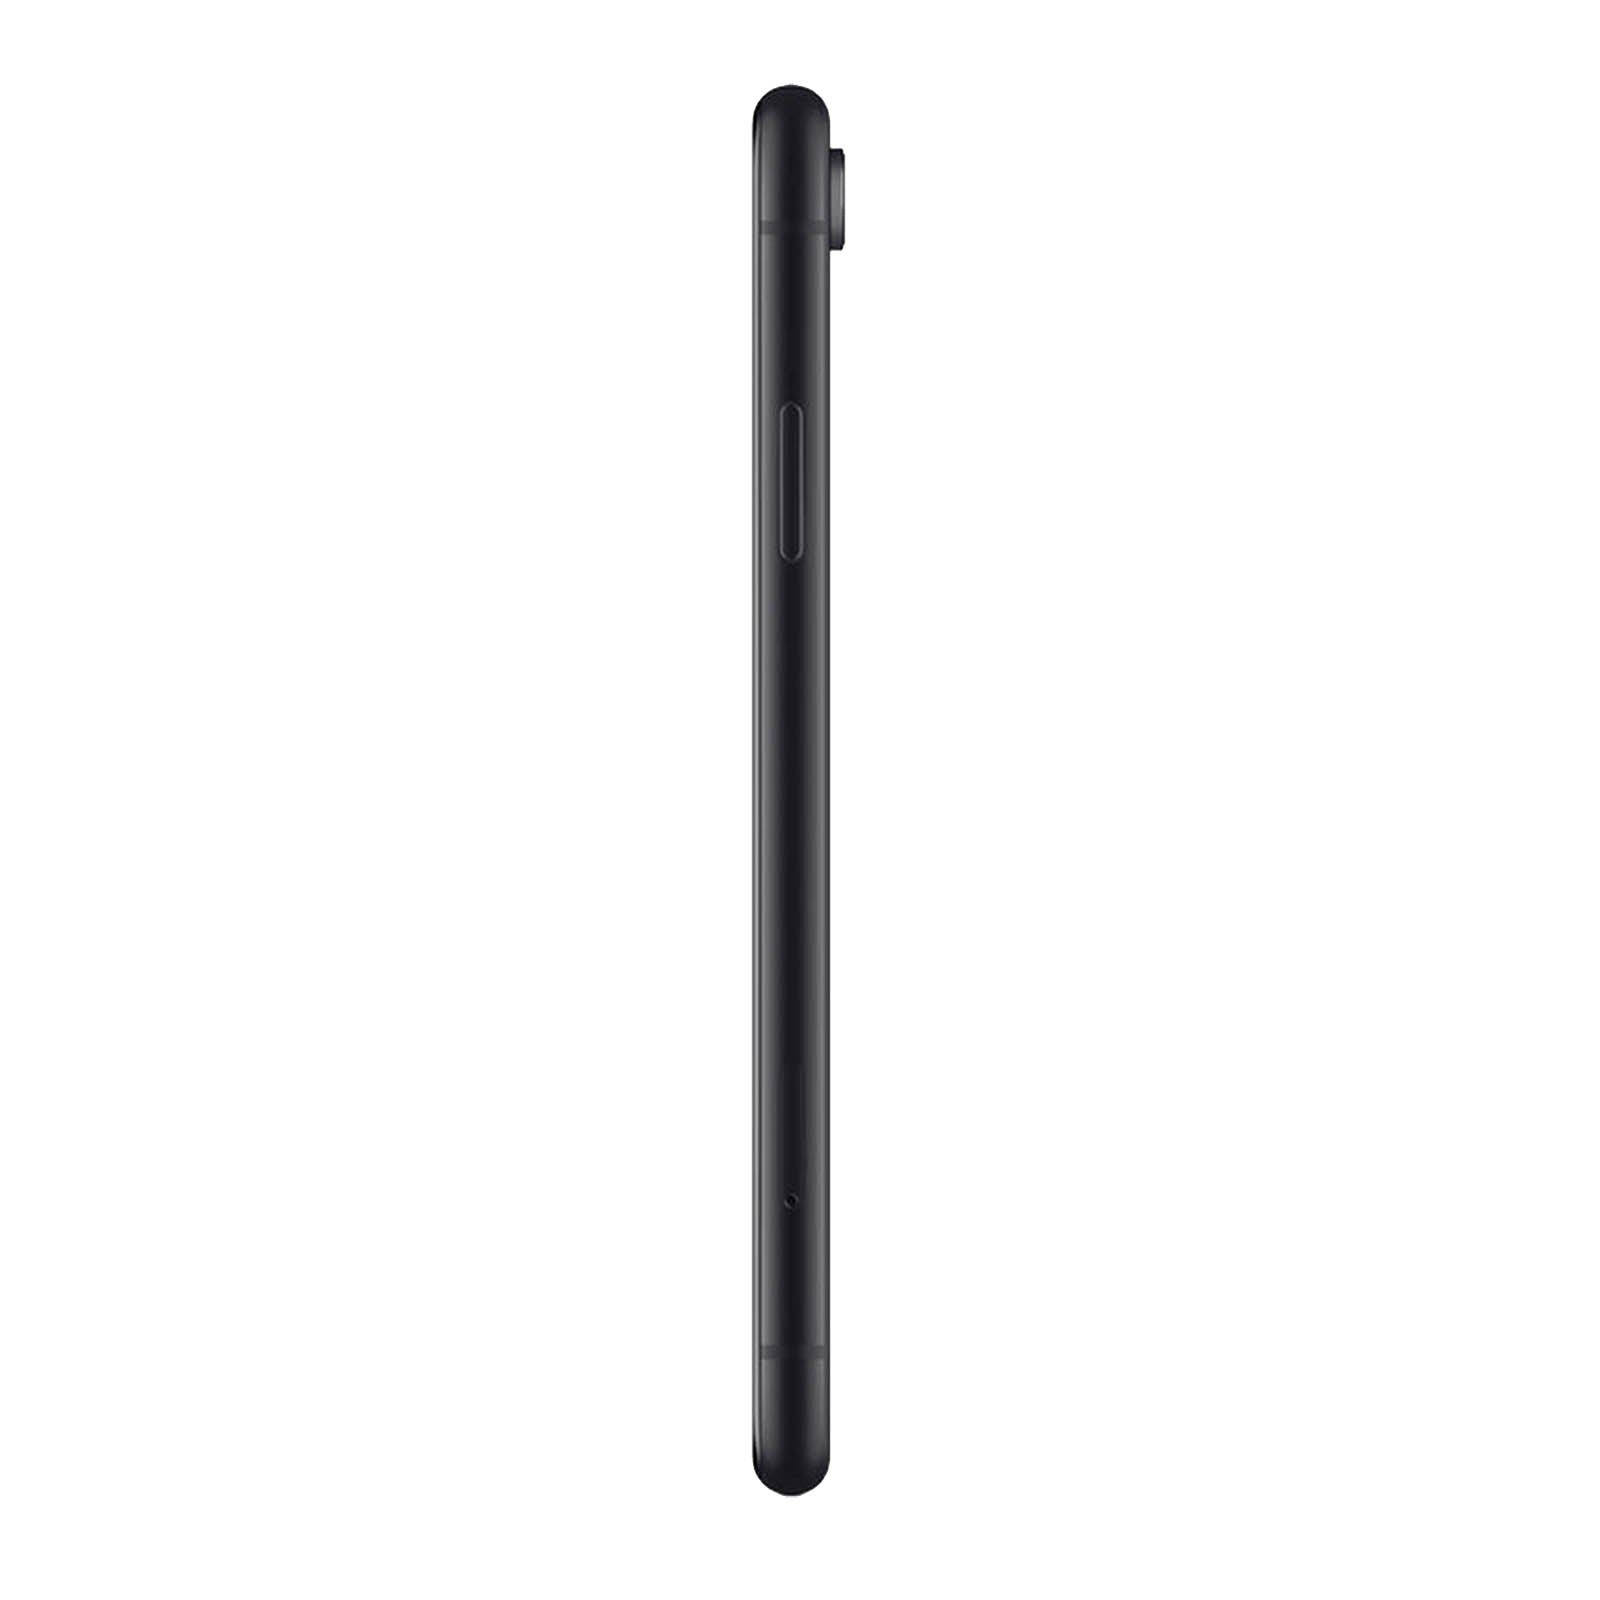 Apple iPhone XR 128GB Black Fair - Verizon